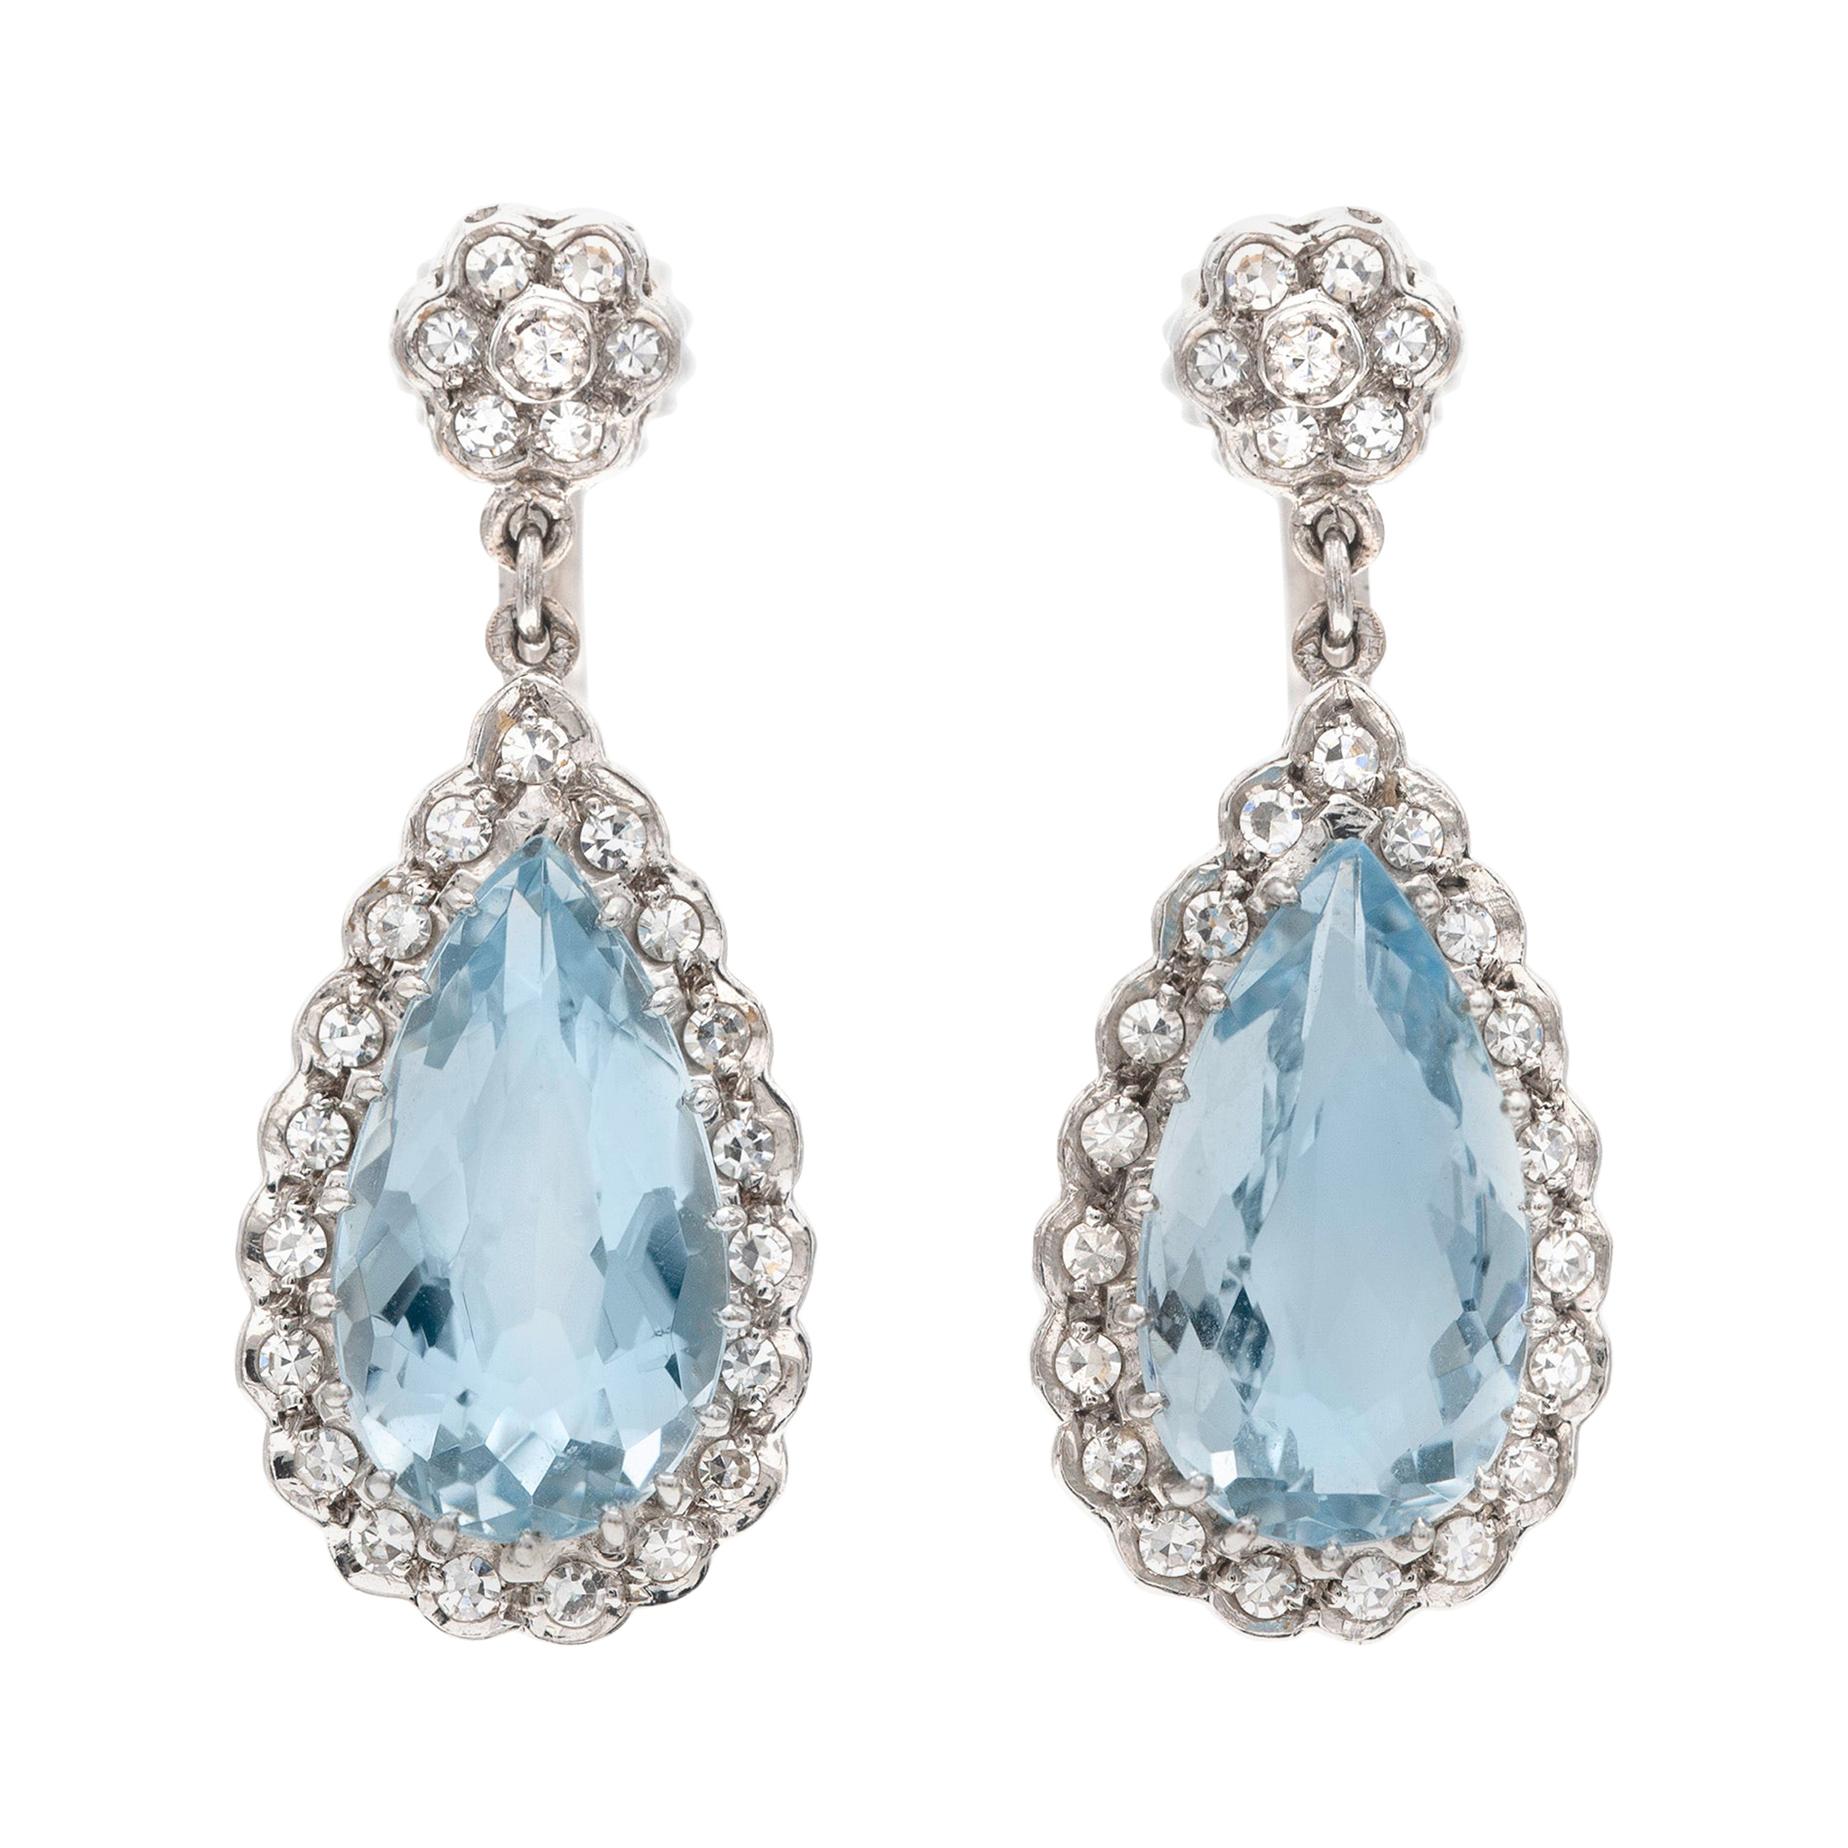 10.00 Carat Pear-Shaped Aquamarine Drop Earrings with Diamonds